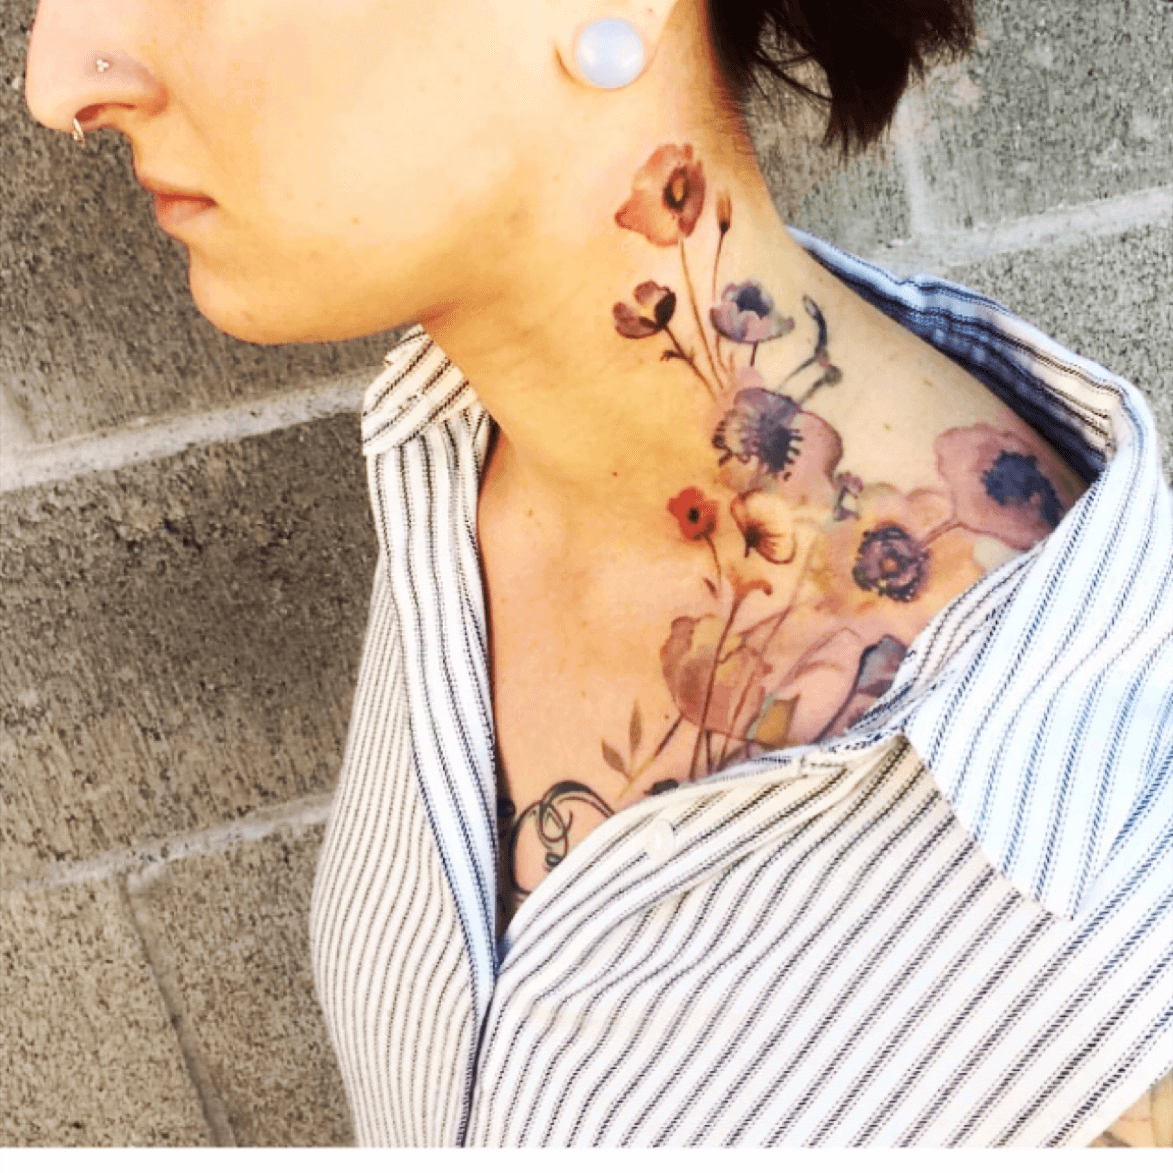 The Canvas Arts Temporary Tattoo Waterproof Hot  Sexy Tattoo for Mens   Women M93 19X9 cm Flowers Tattoo  Amazonin Beauty